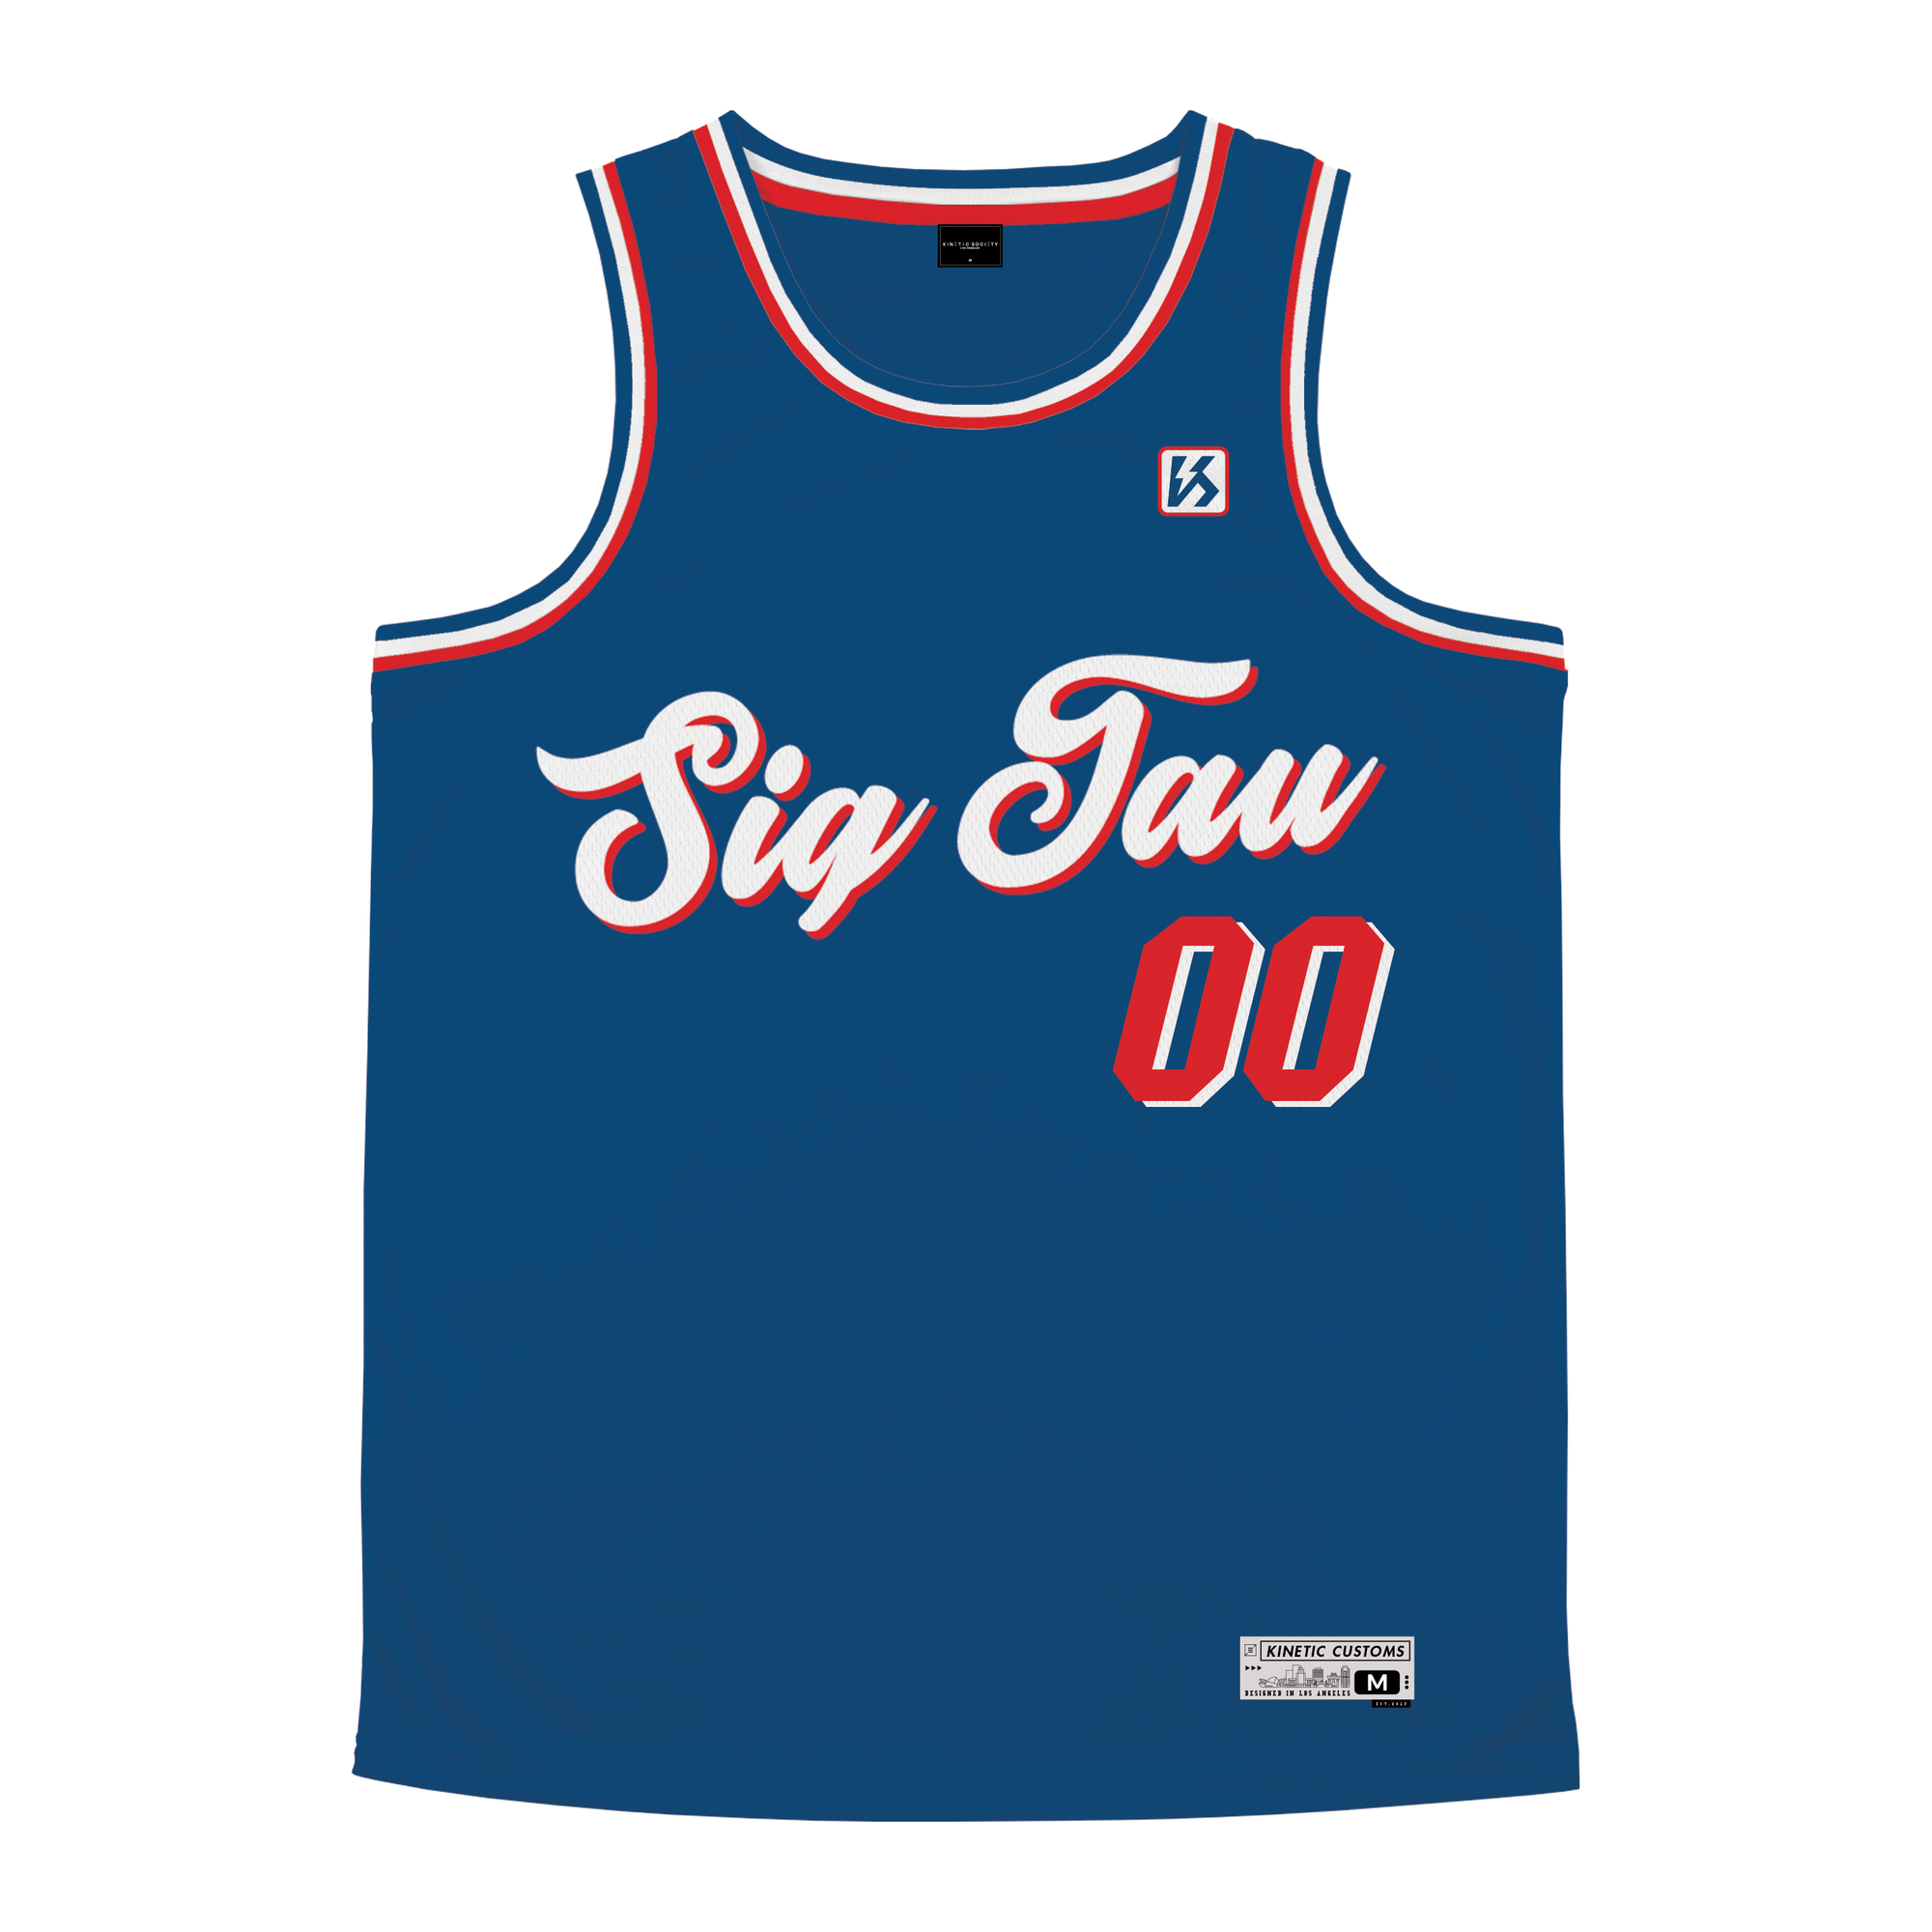 Sigma Tau Gamma - The Dream Basketball Jersey